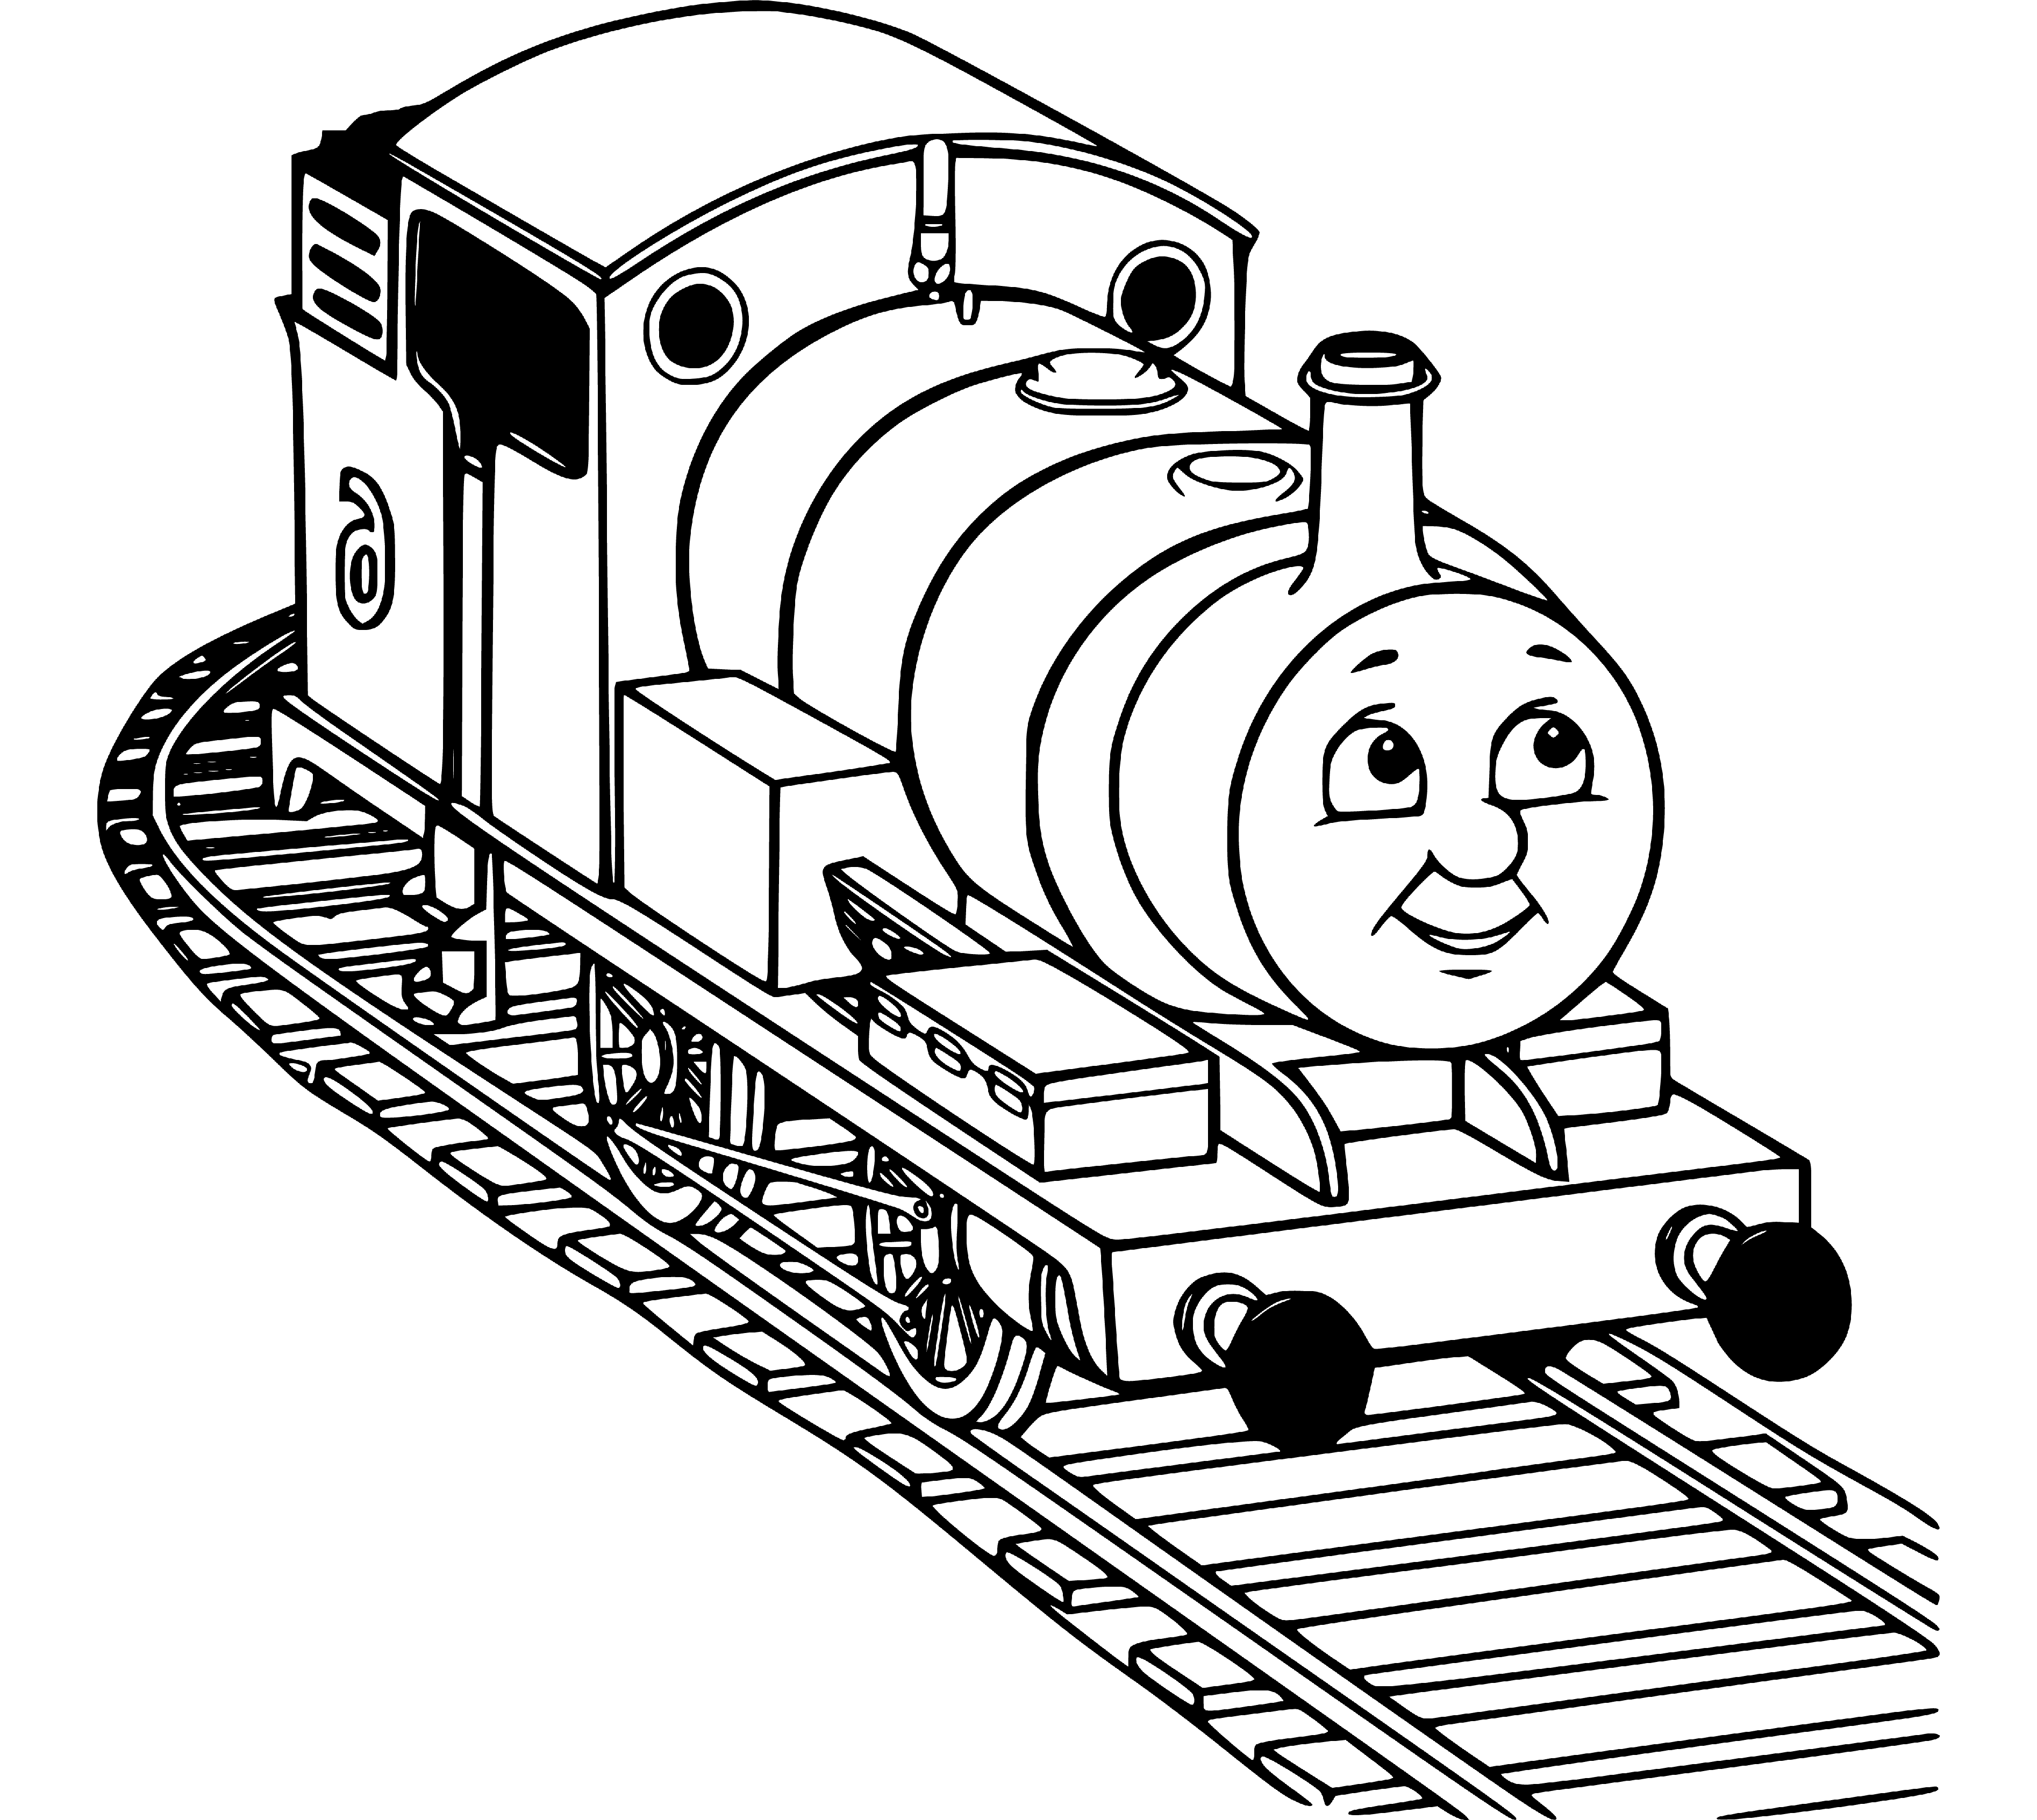 Percy the Train Coloring Page (Thomas) - SheetalColor.com